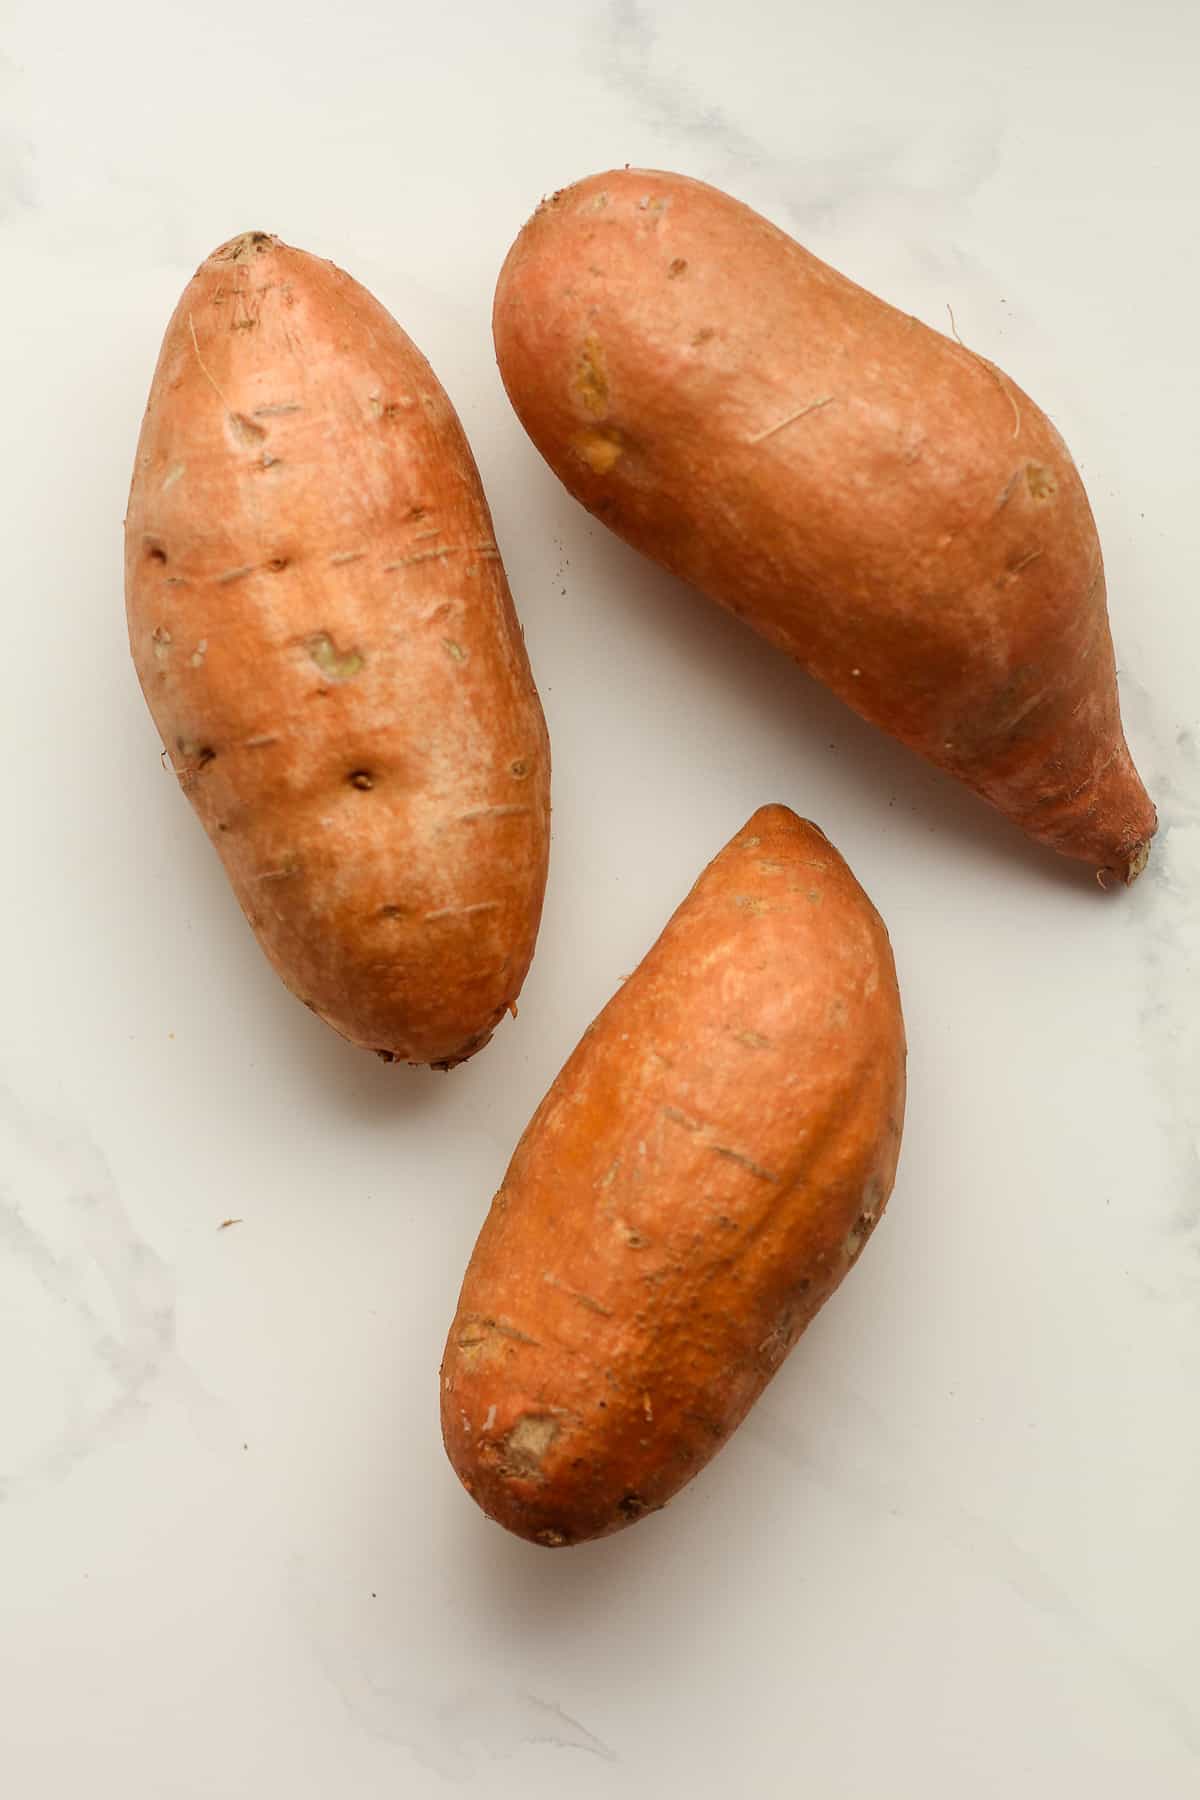 Three medium sweet potatoes.